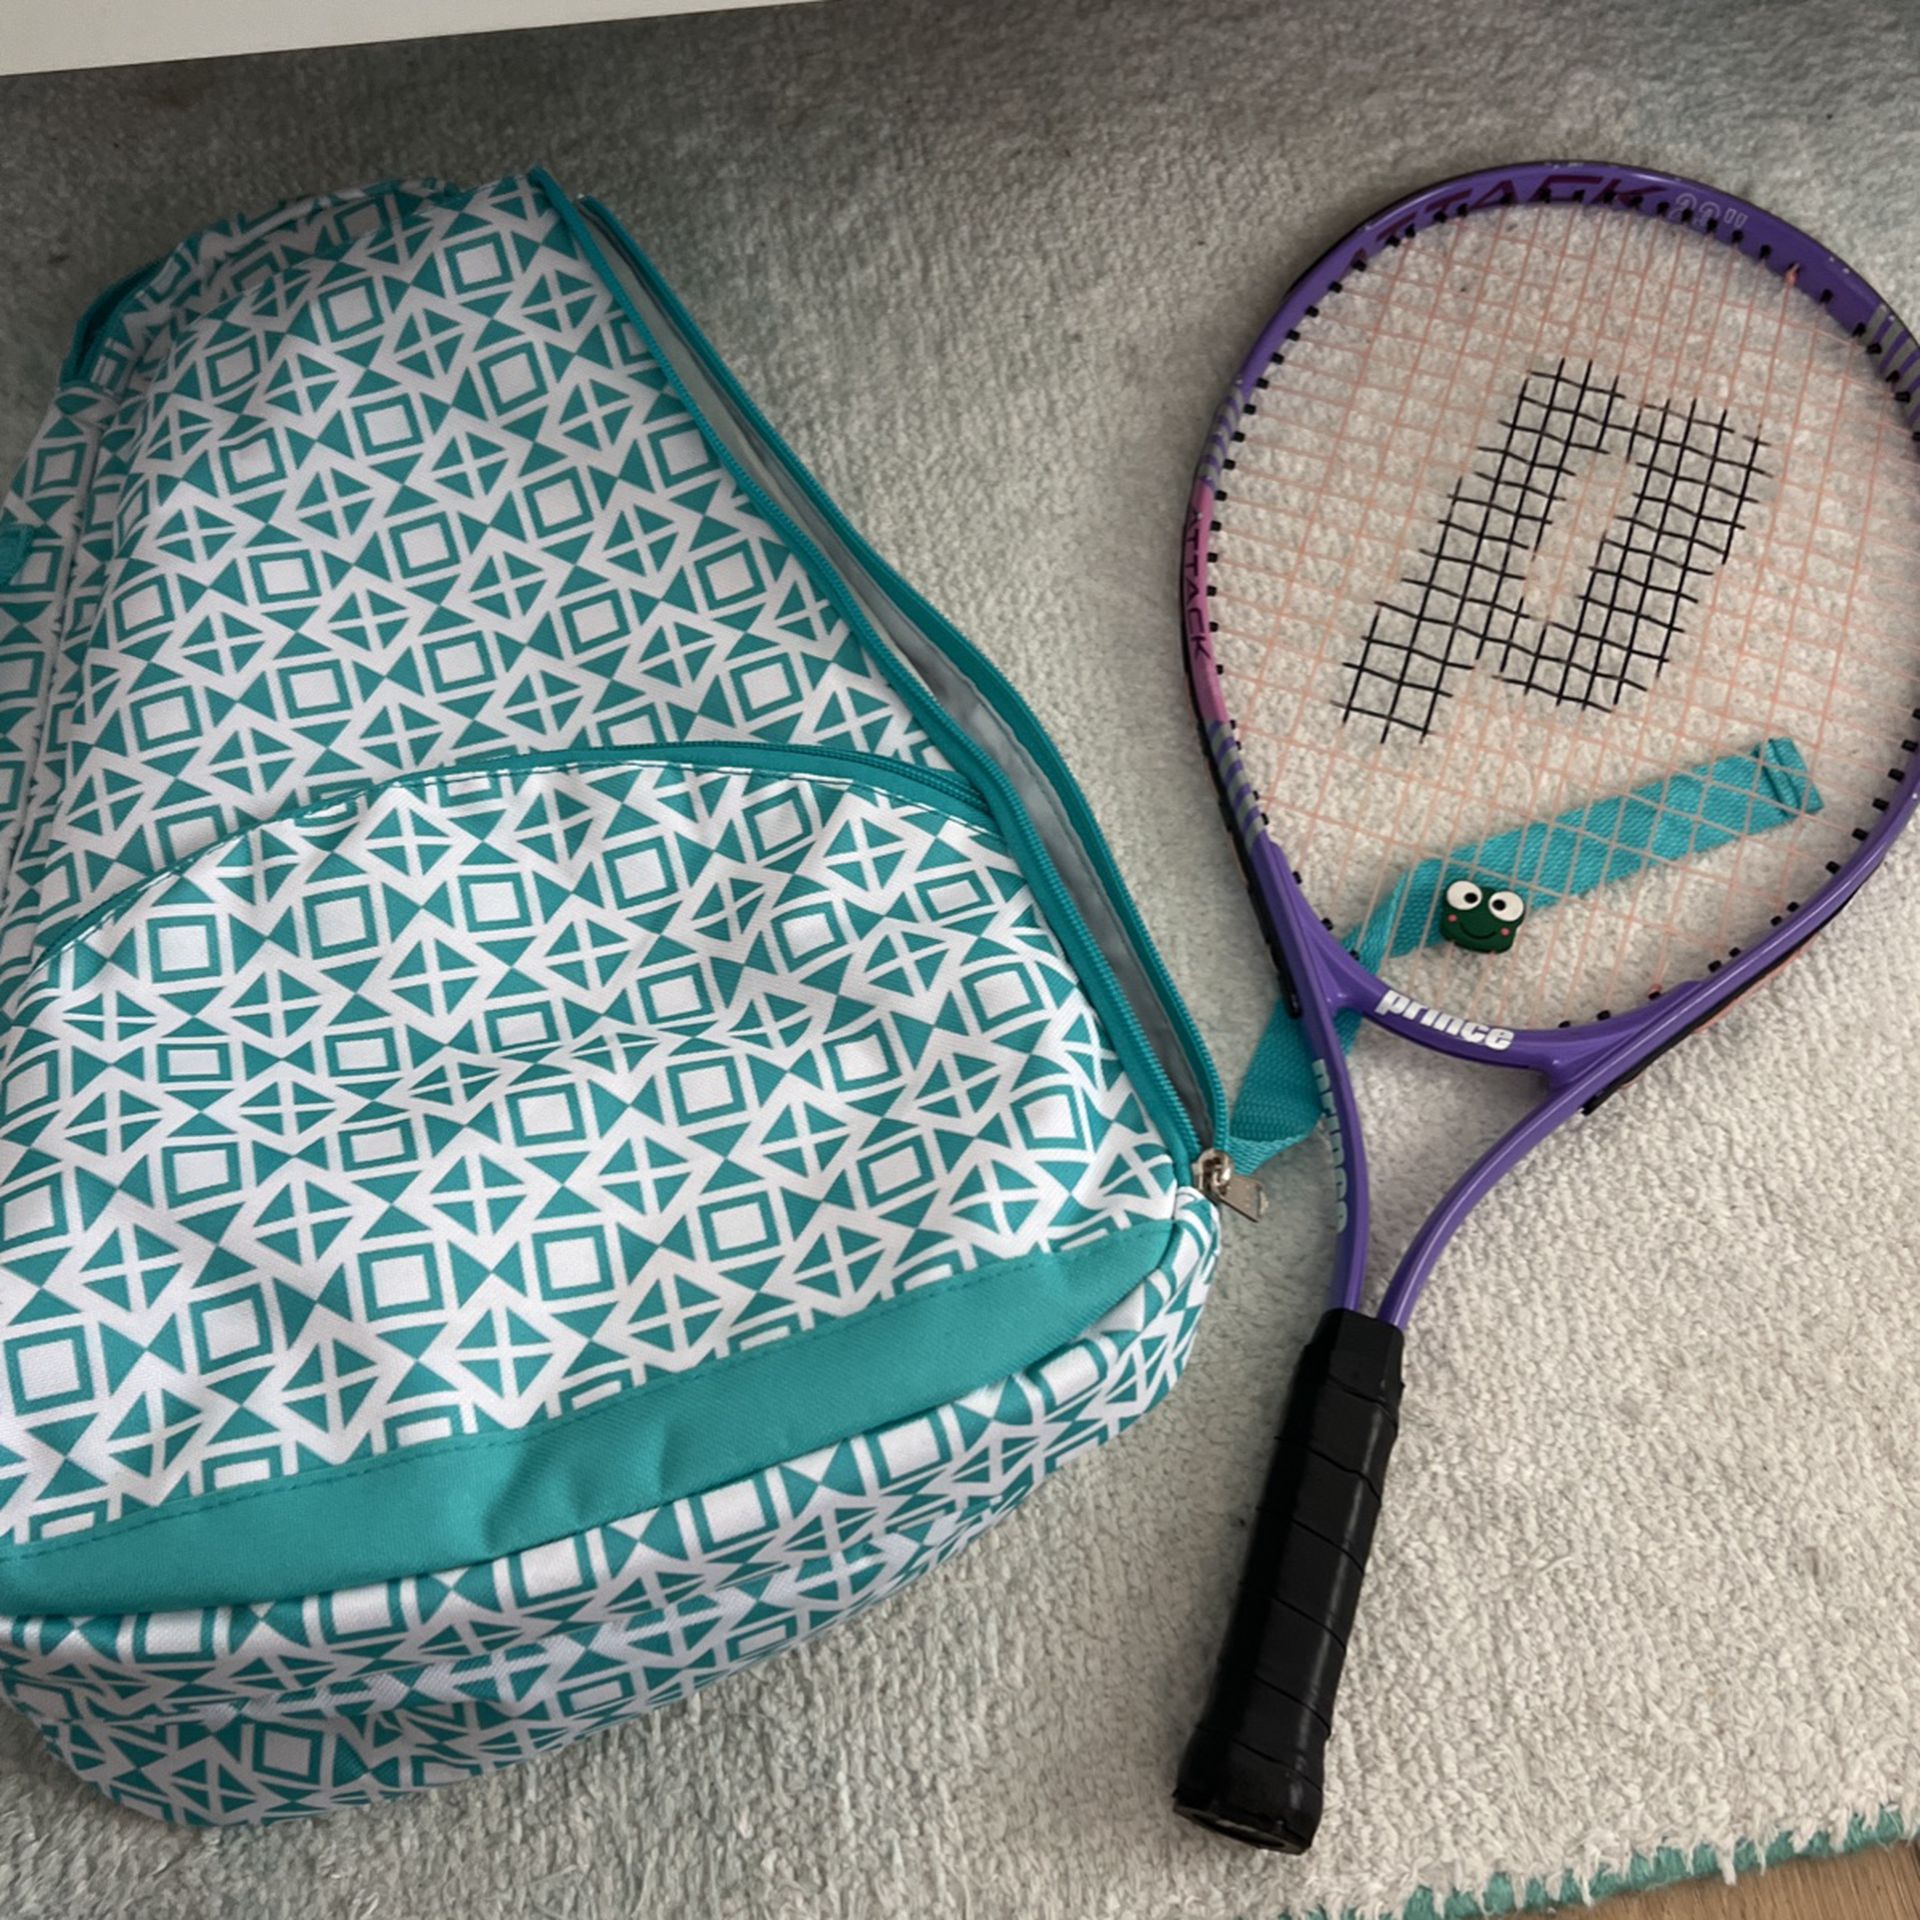 Tennis Racket And Tennis Bag